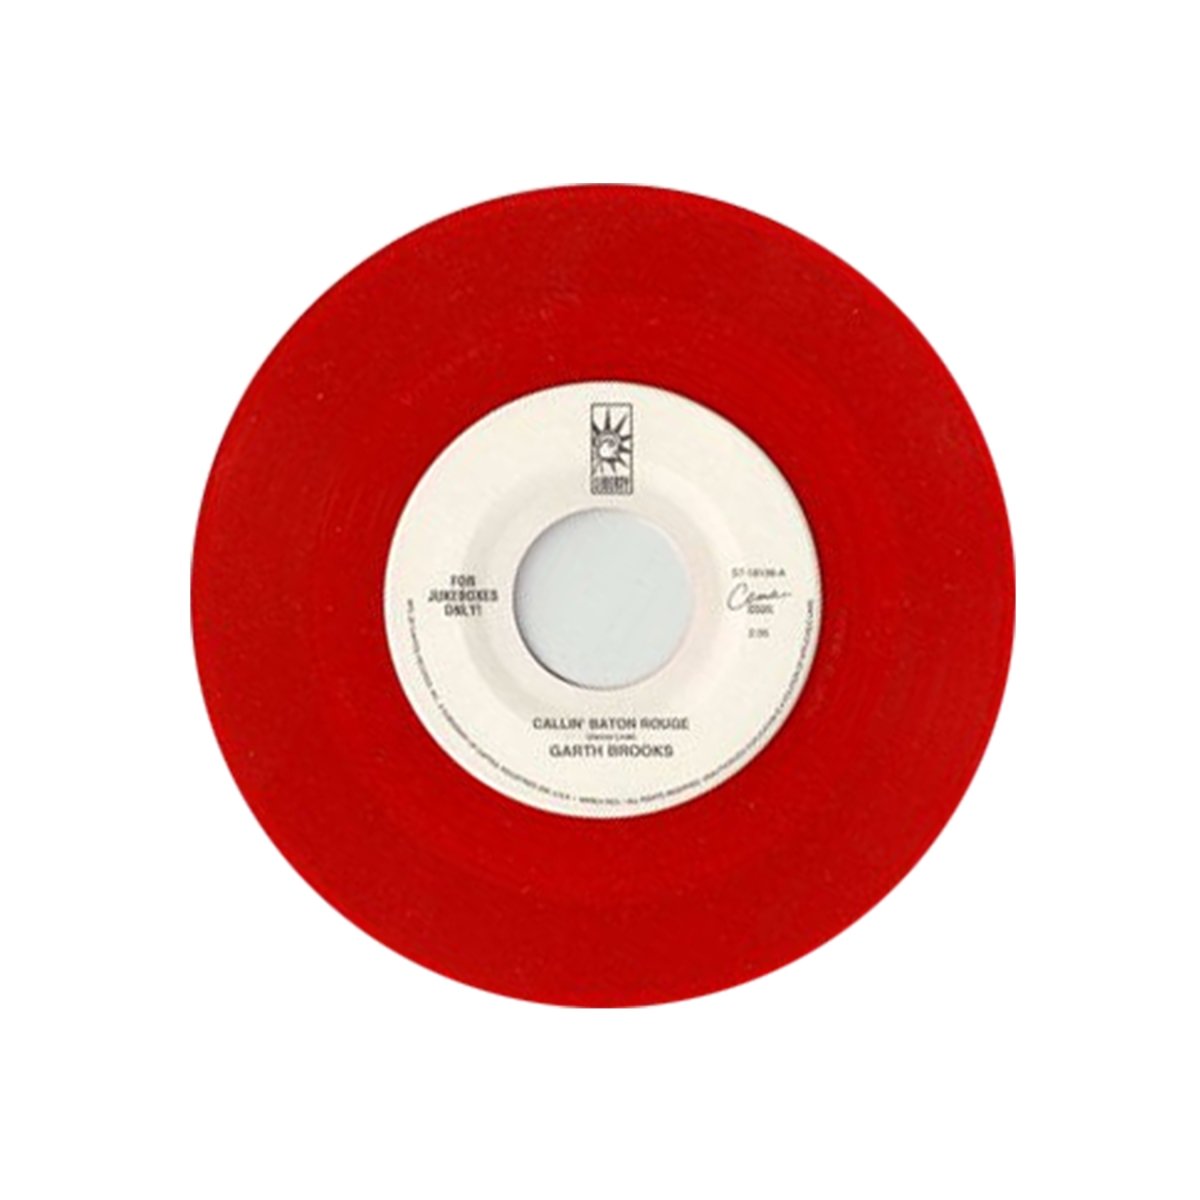 Garth Brooks - Callin' Baton Rouge / Same Old Story 7" Vinyl